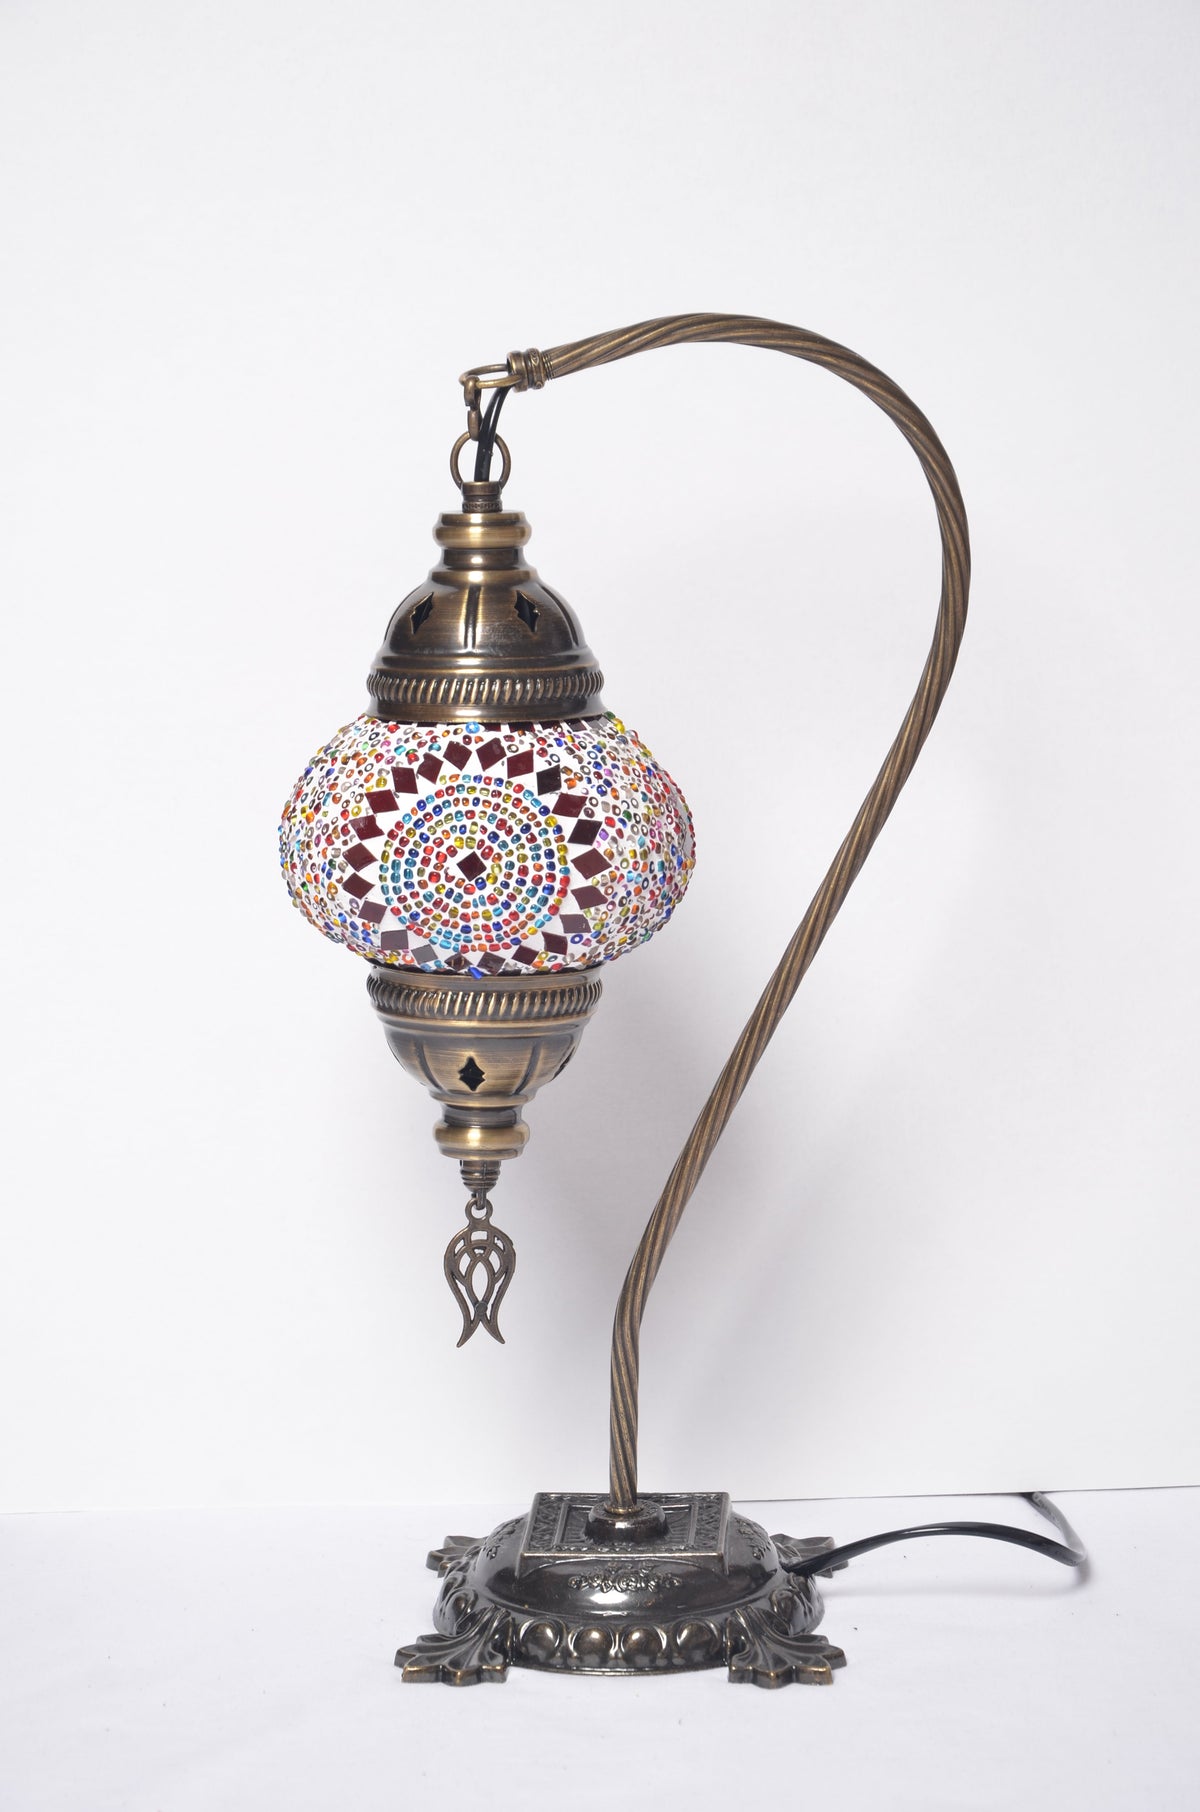 Turkish Swan Neck Mosaic Glass Handmade Decorative Table Lamps - Multicolor Center Circle - Unique Custom Moroccan Lamp Shades - KAFTHAN